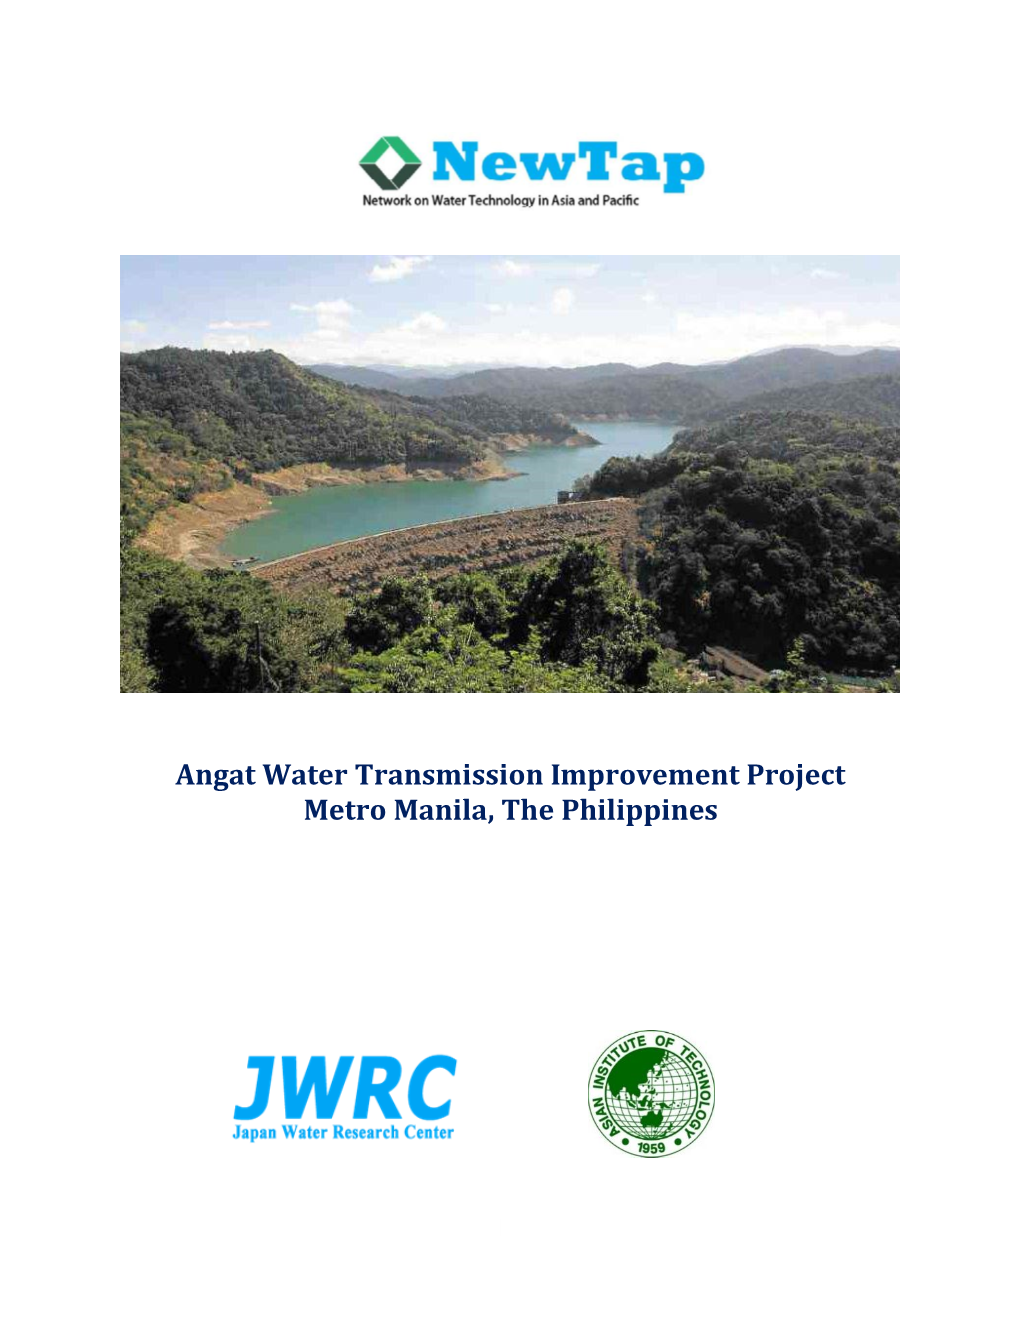 Angat Water Transmission Improvement Project Metro Manila, the Philippines